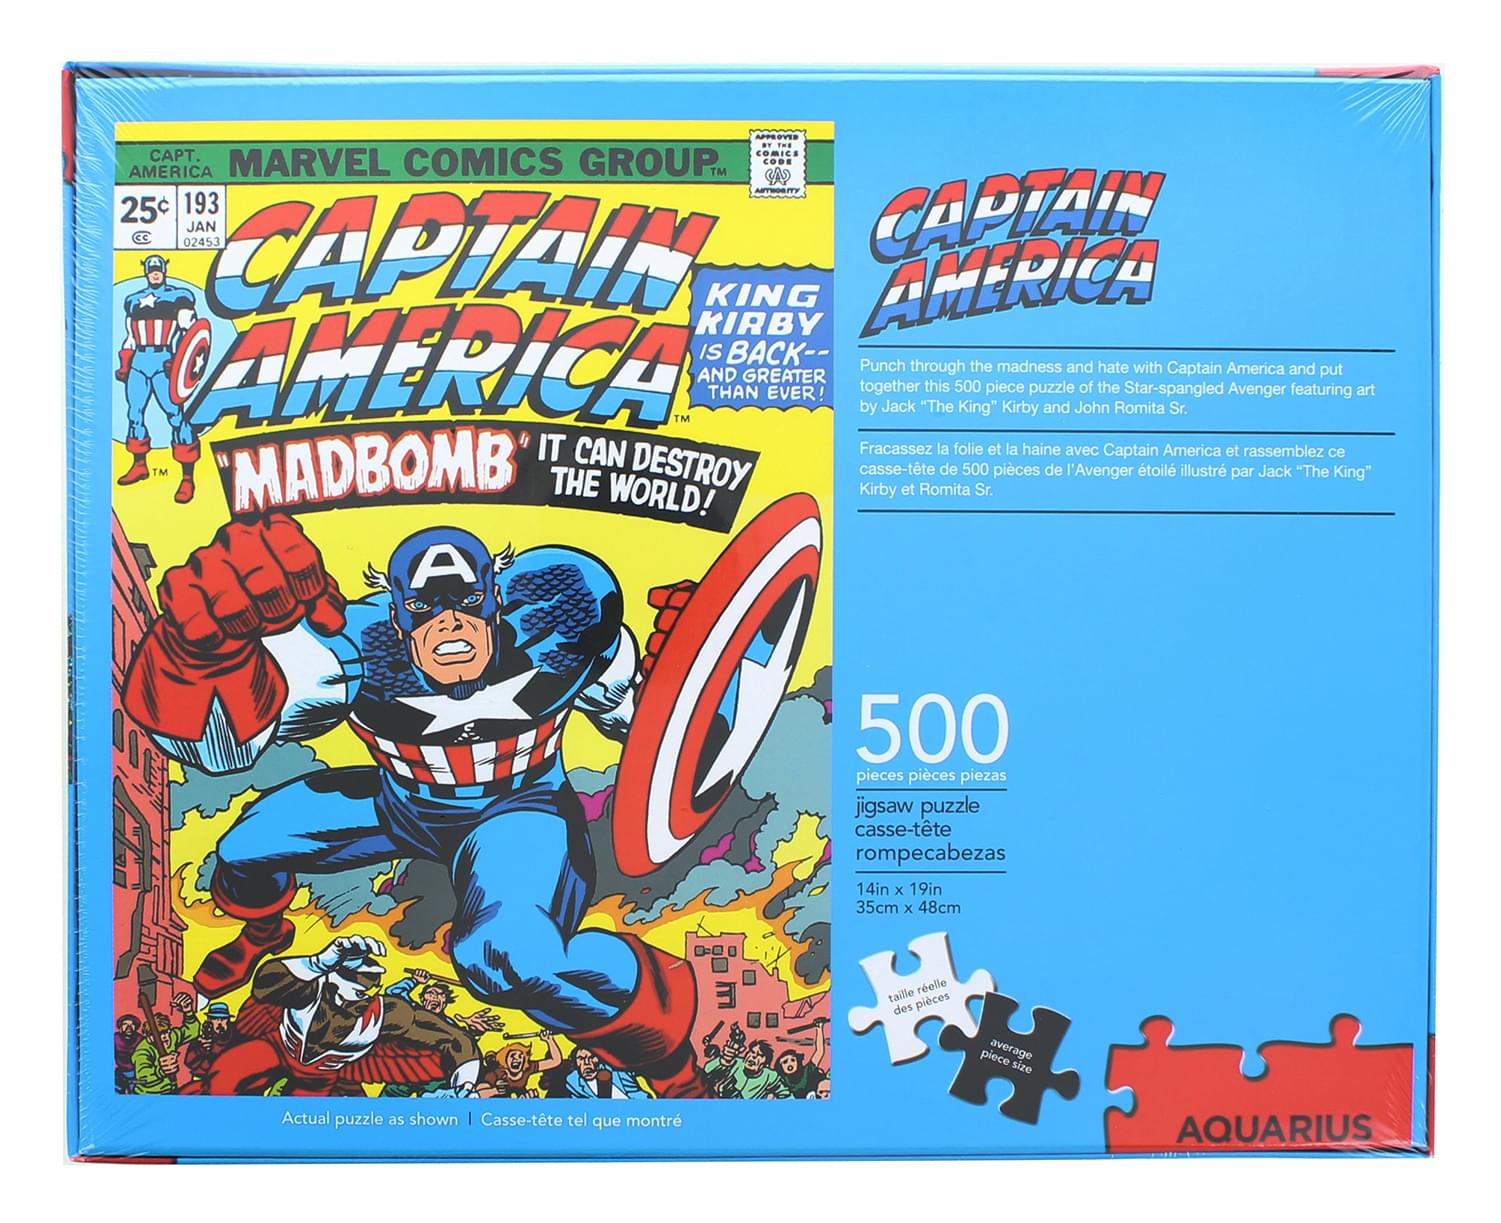 Marvel Captain America #193 Comic Cover 500 Piece Jigsaw Puzzle